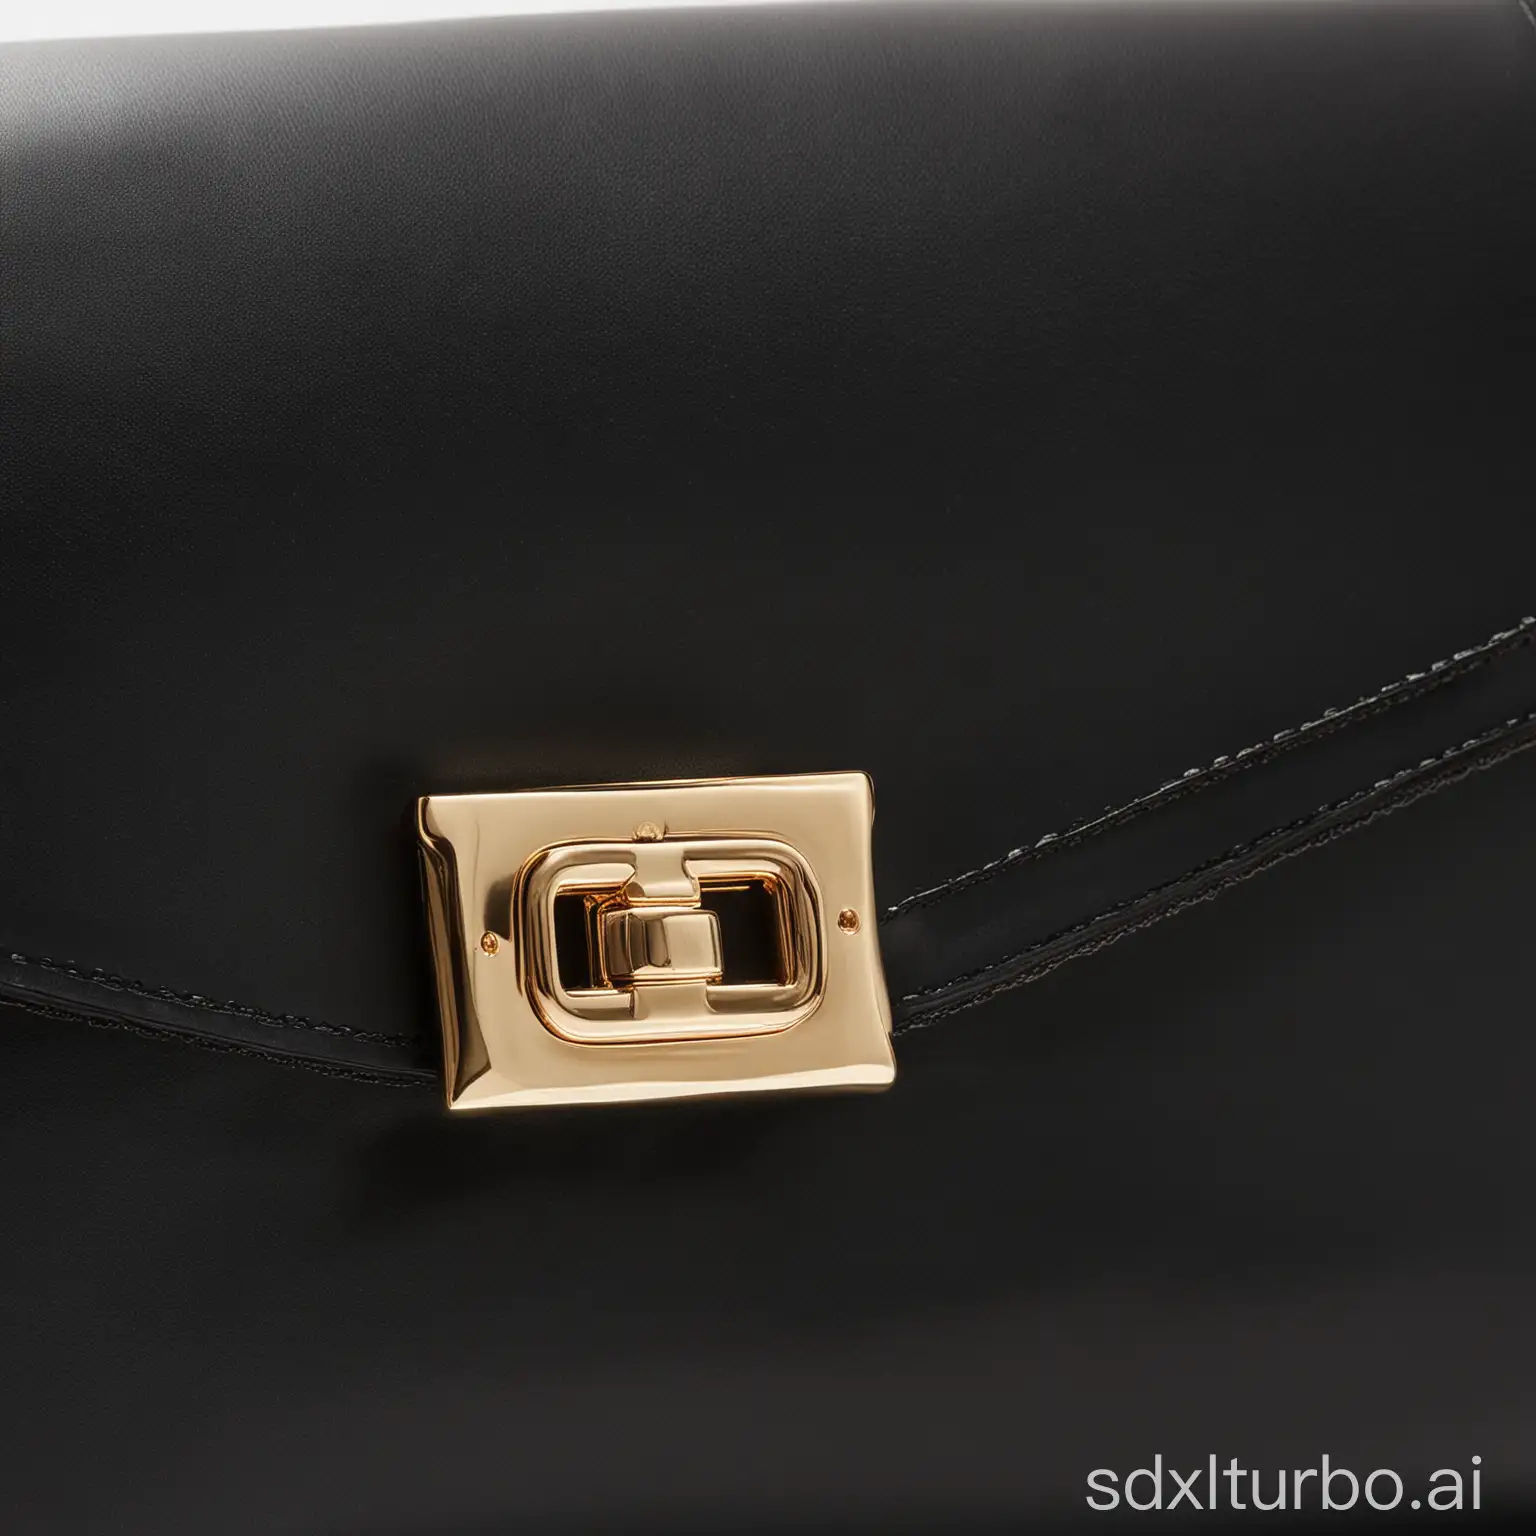 Luxurious-Black-Leather-Handbag-with-Gold-Hardware-on-White-Background